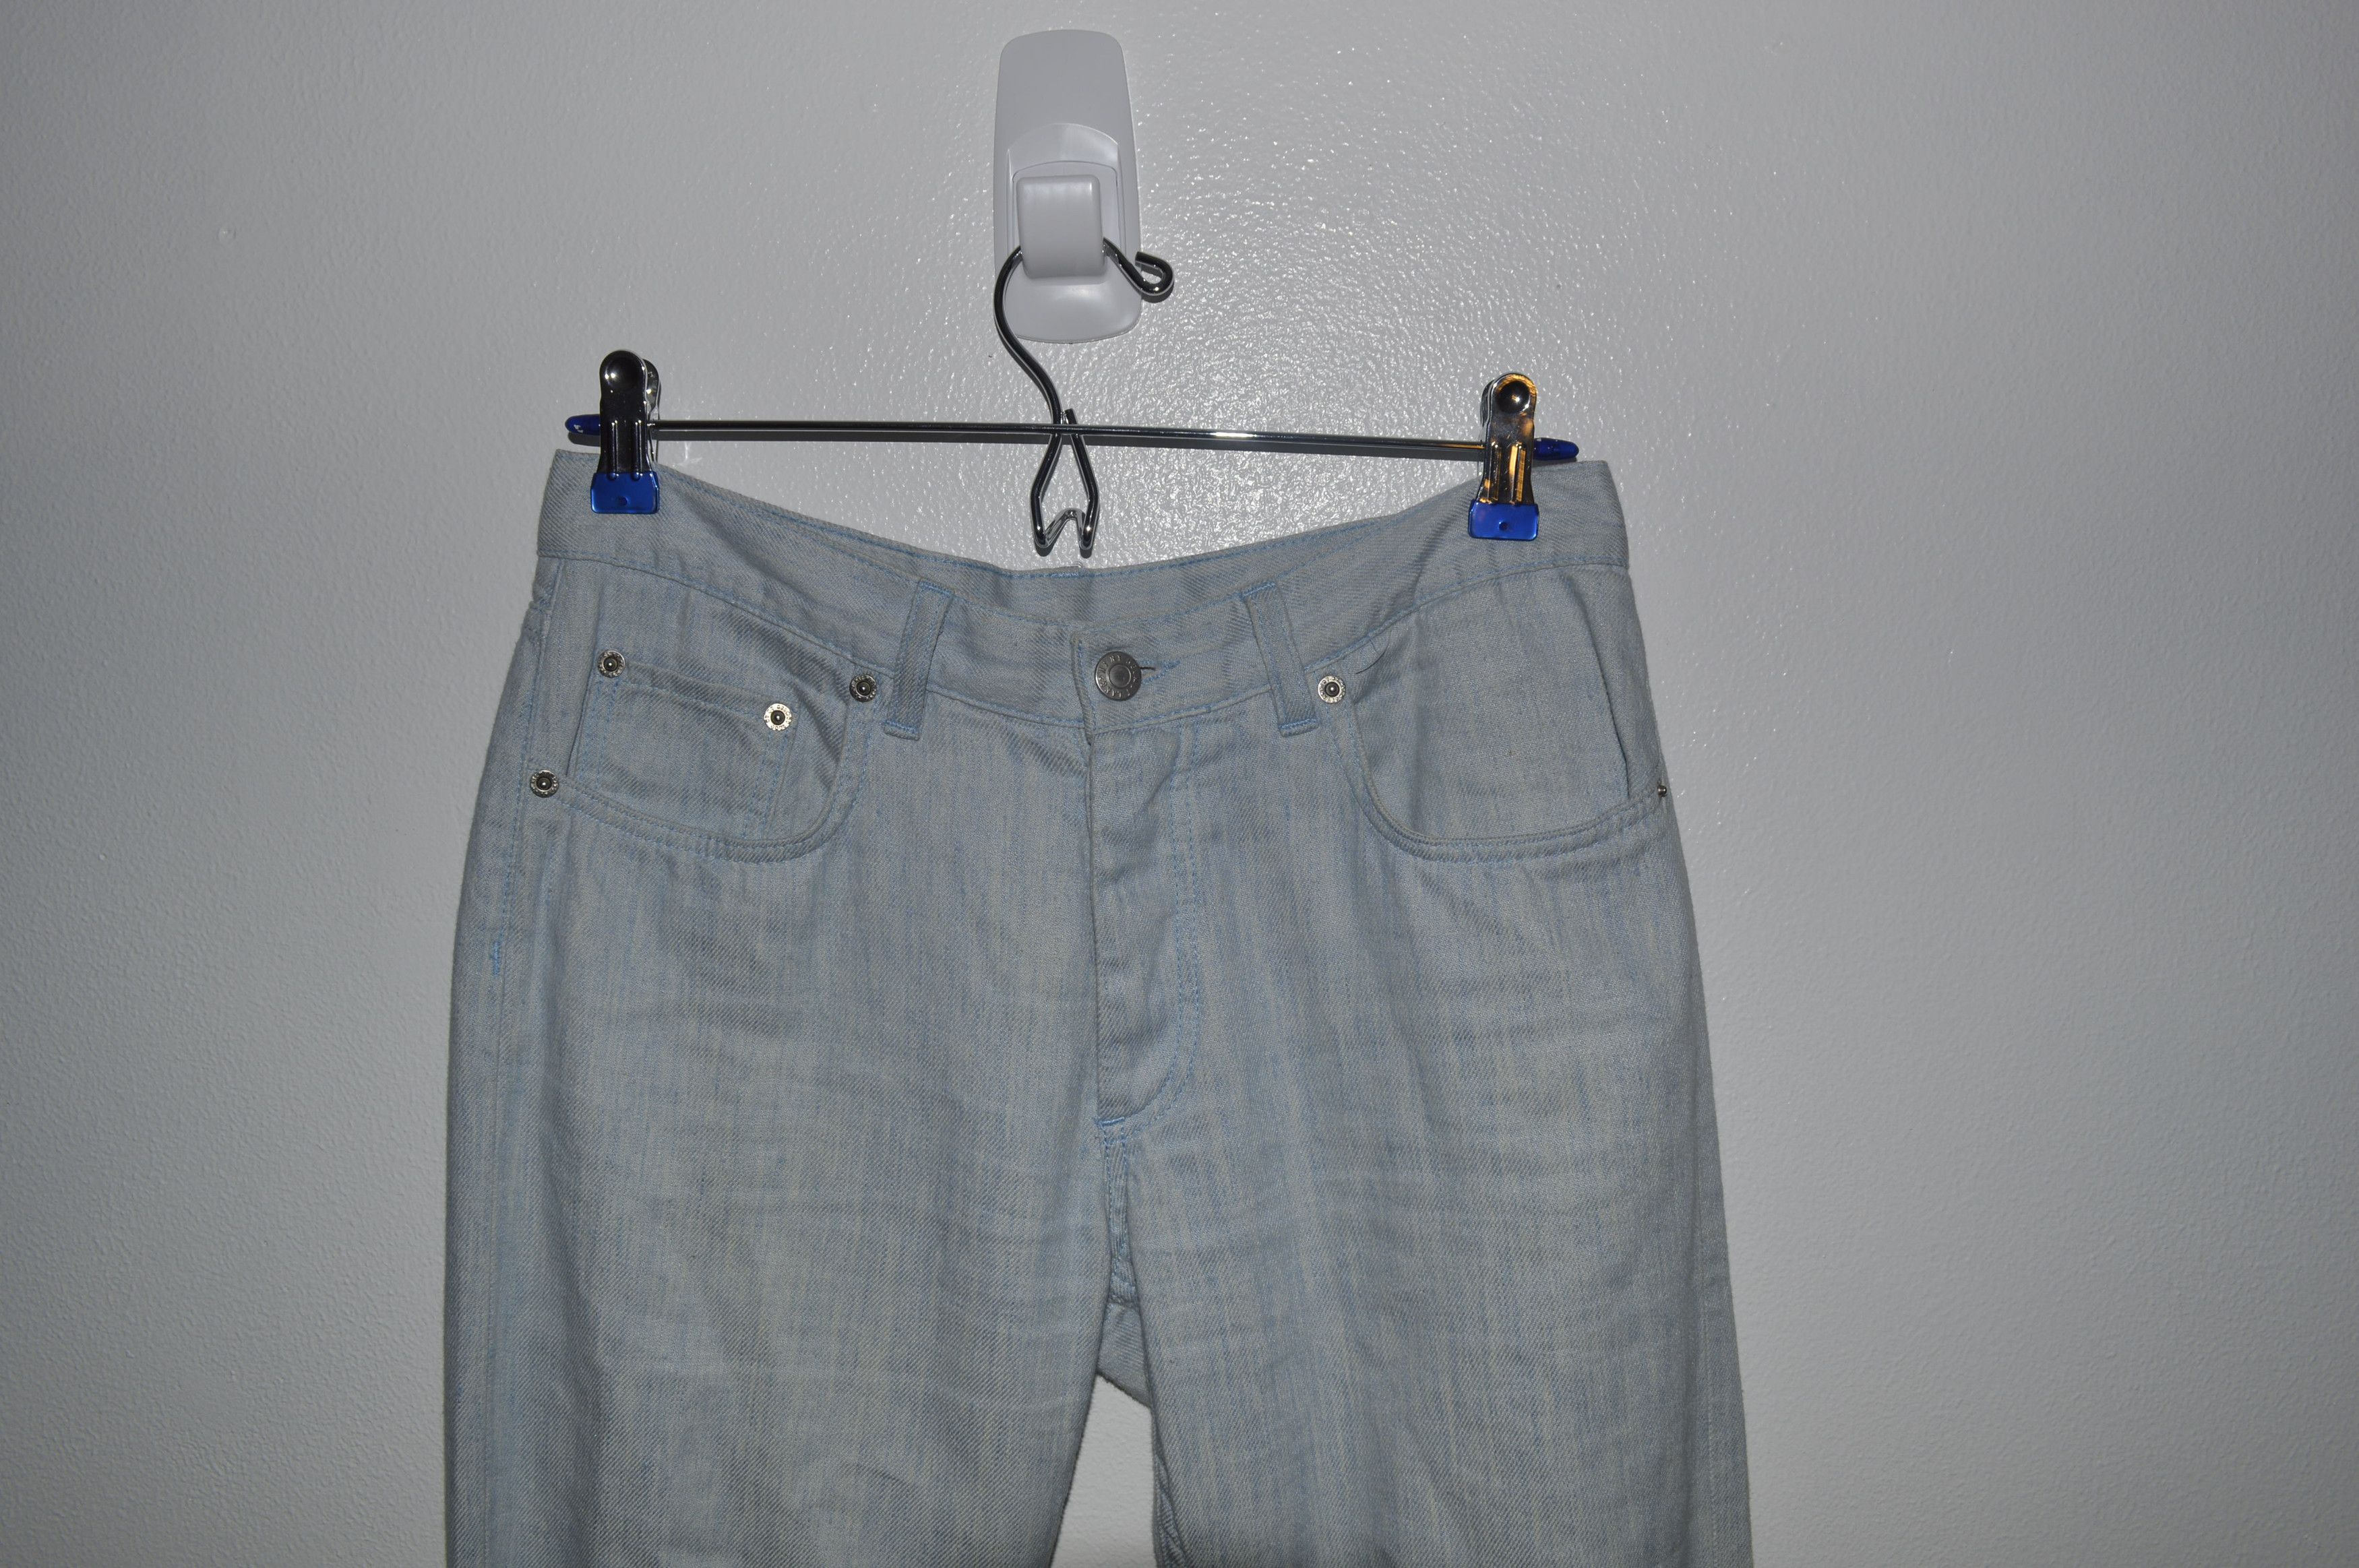 Helmut Lang SS/98 OG Lang Linen/Cotton Light Slim Jeans Mainline Size US 29 - 7 Thumbnail